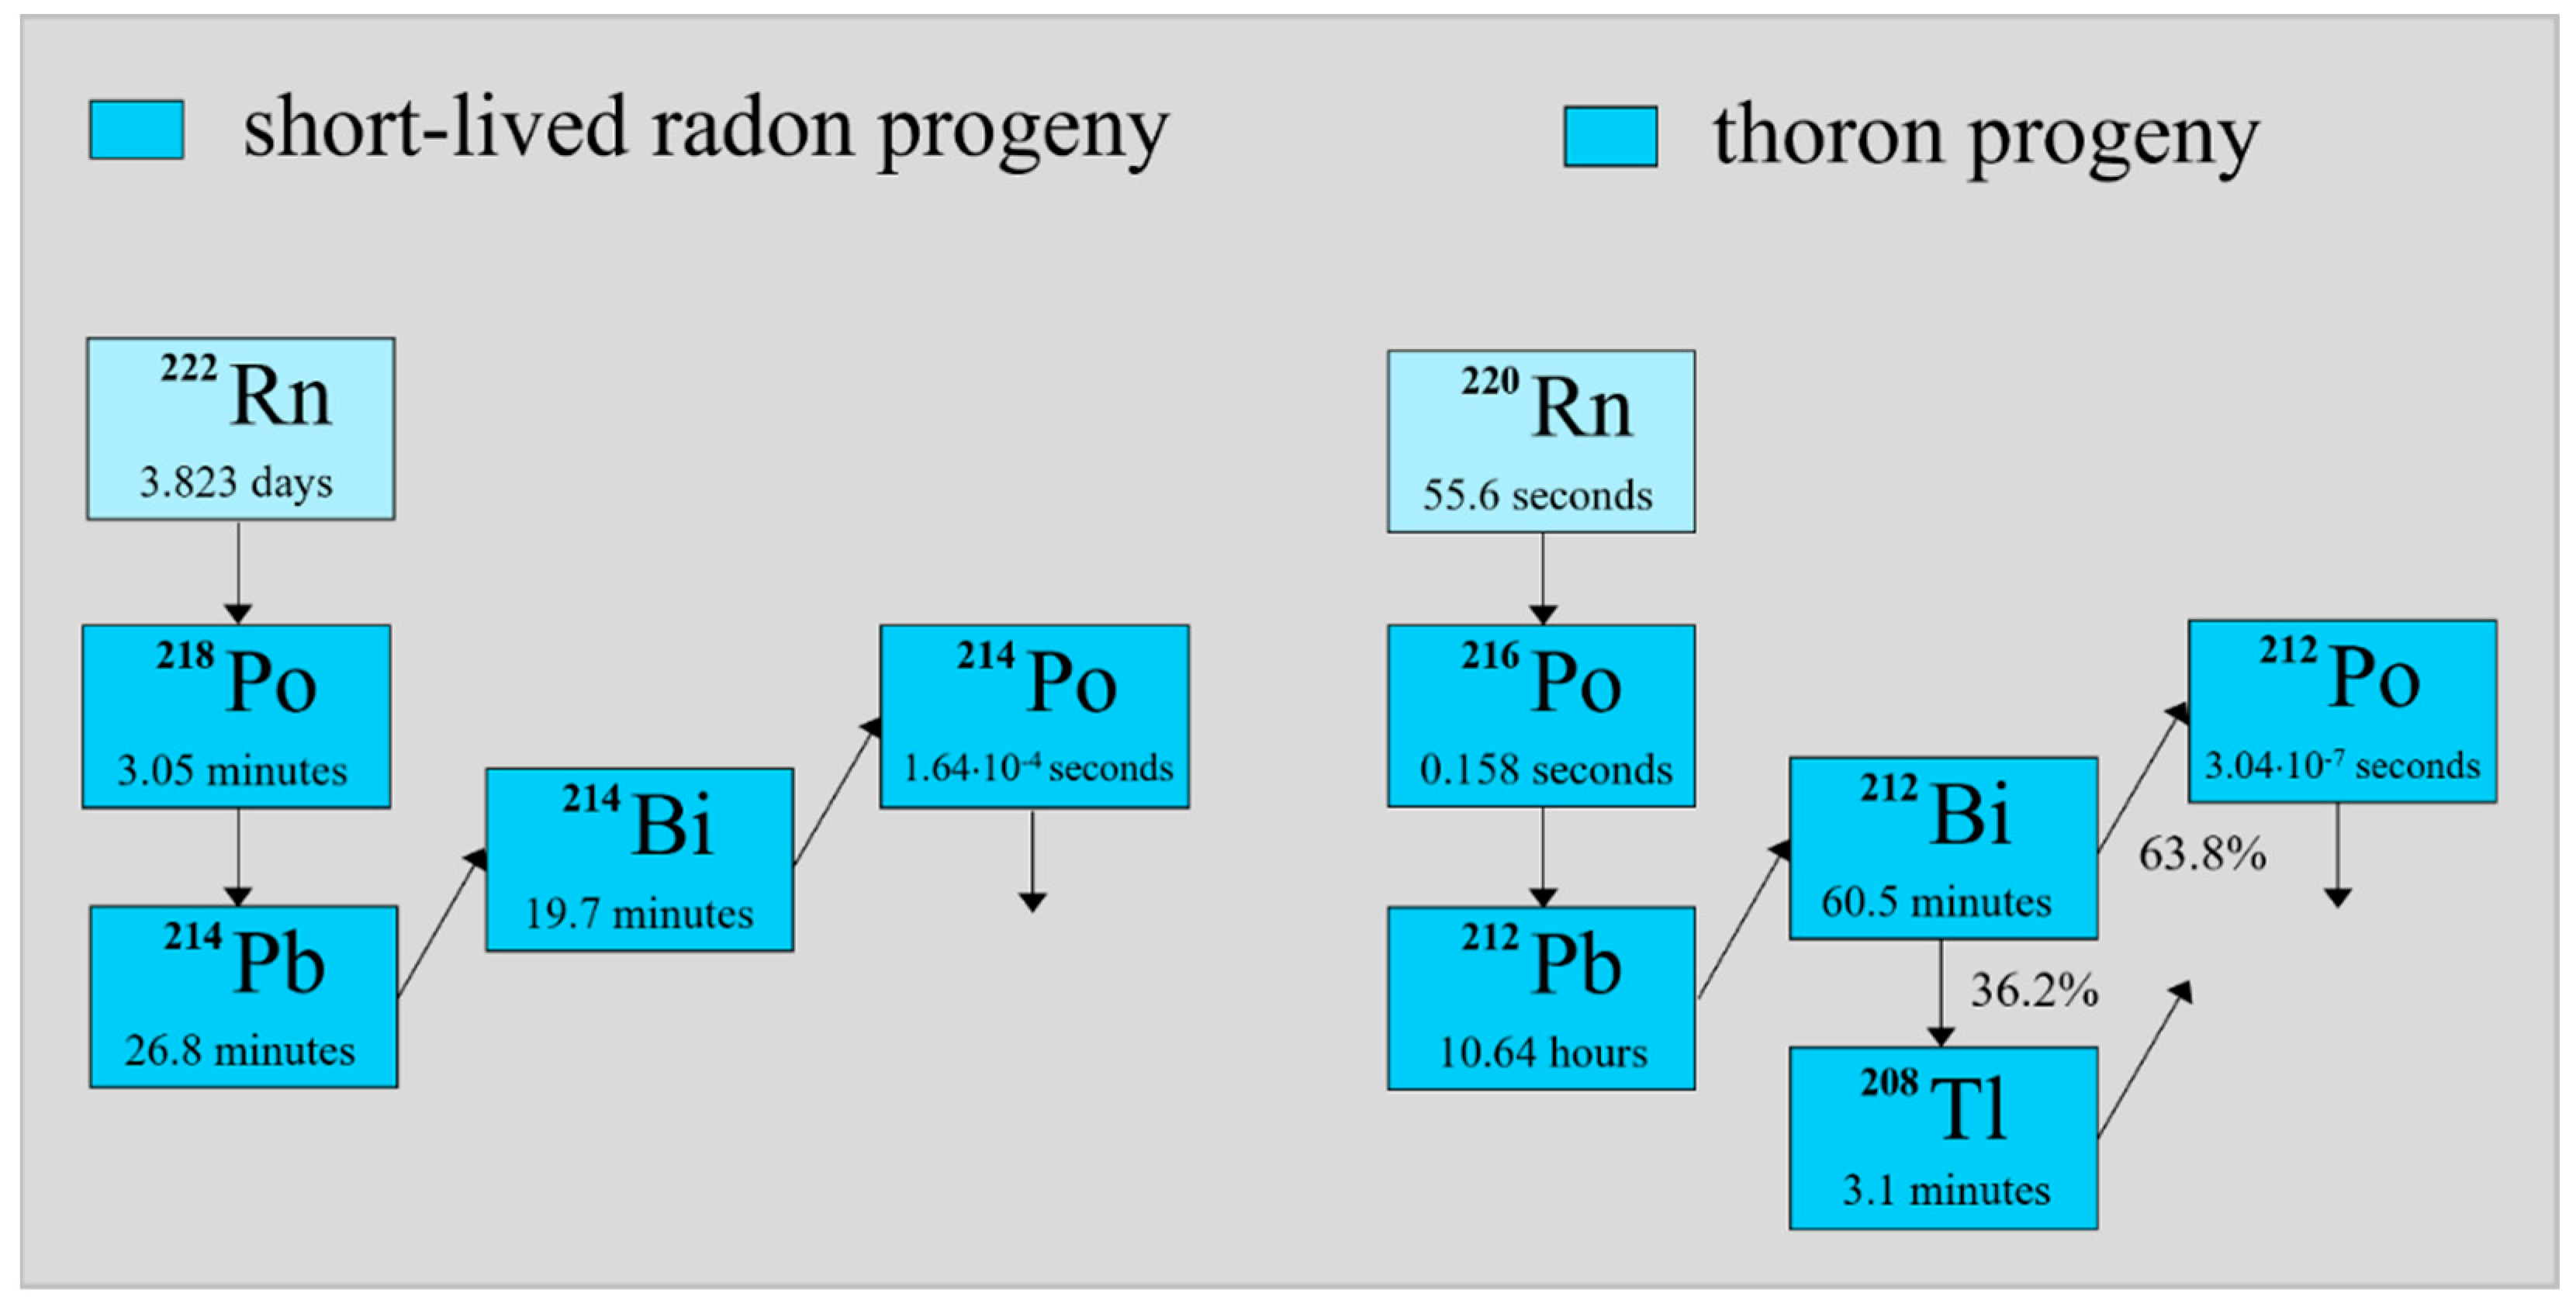 Radon (Rn) - Properties, Health effects & Uses of Radon